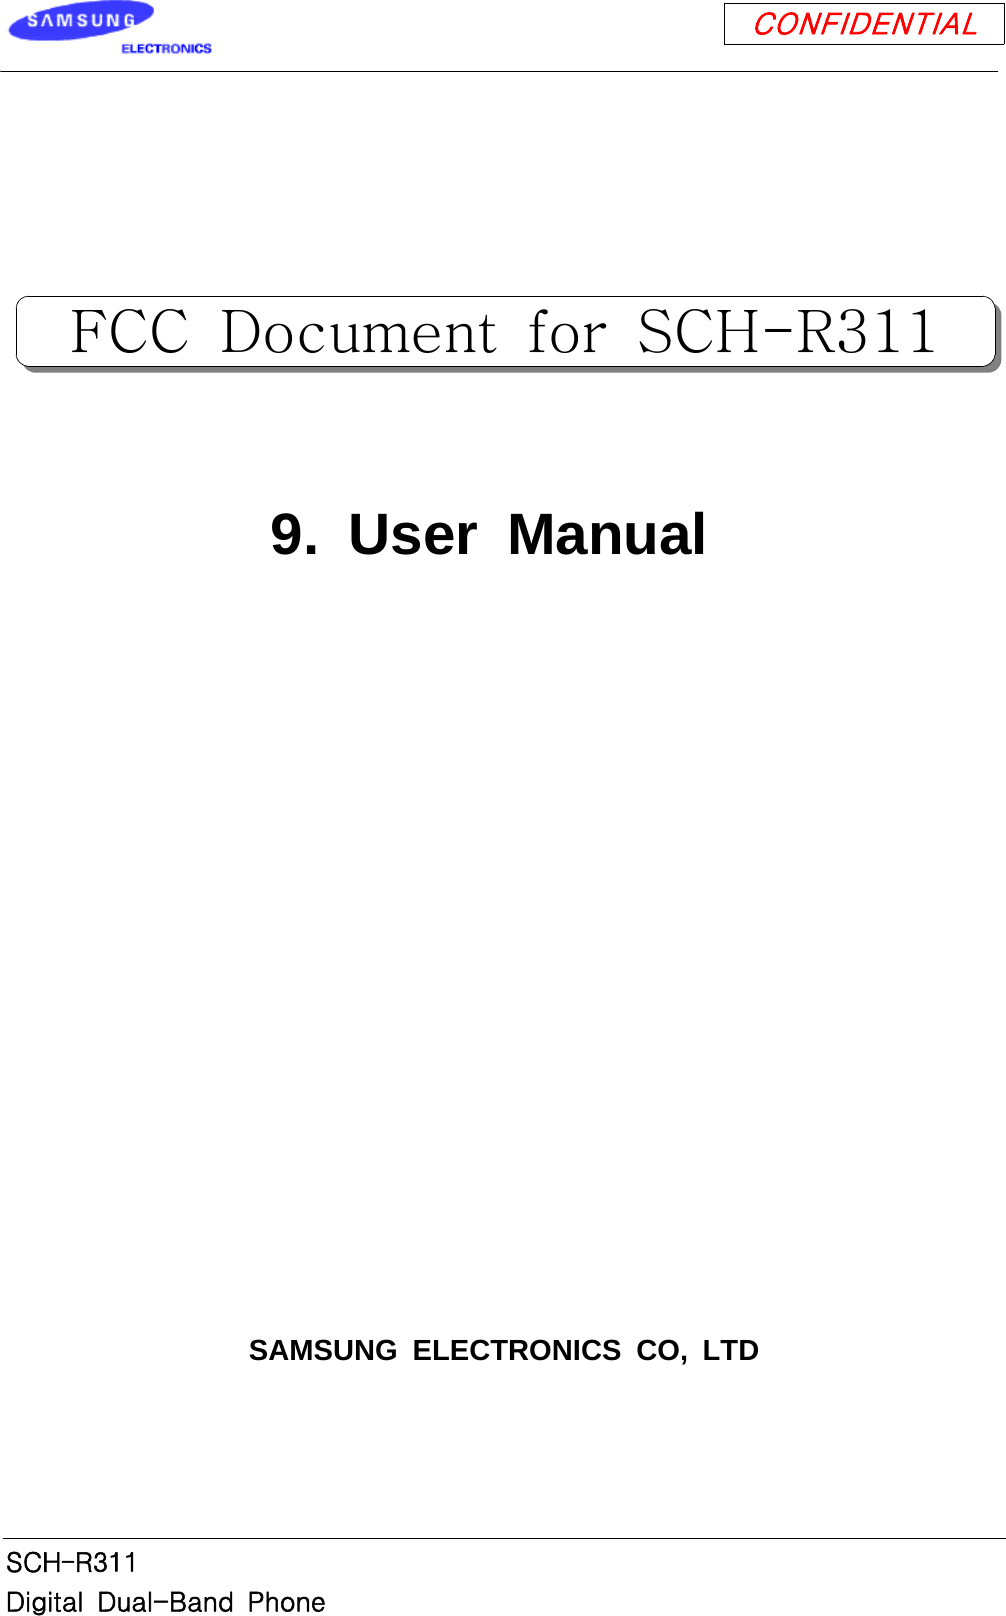 CONFIDENTIALSCH-R311Digital Dual-Band Phone9. User ManualSAMSUNG ELECTRONICS CO, LTDFCC Document for SCH-R311